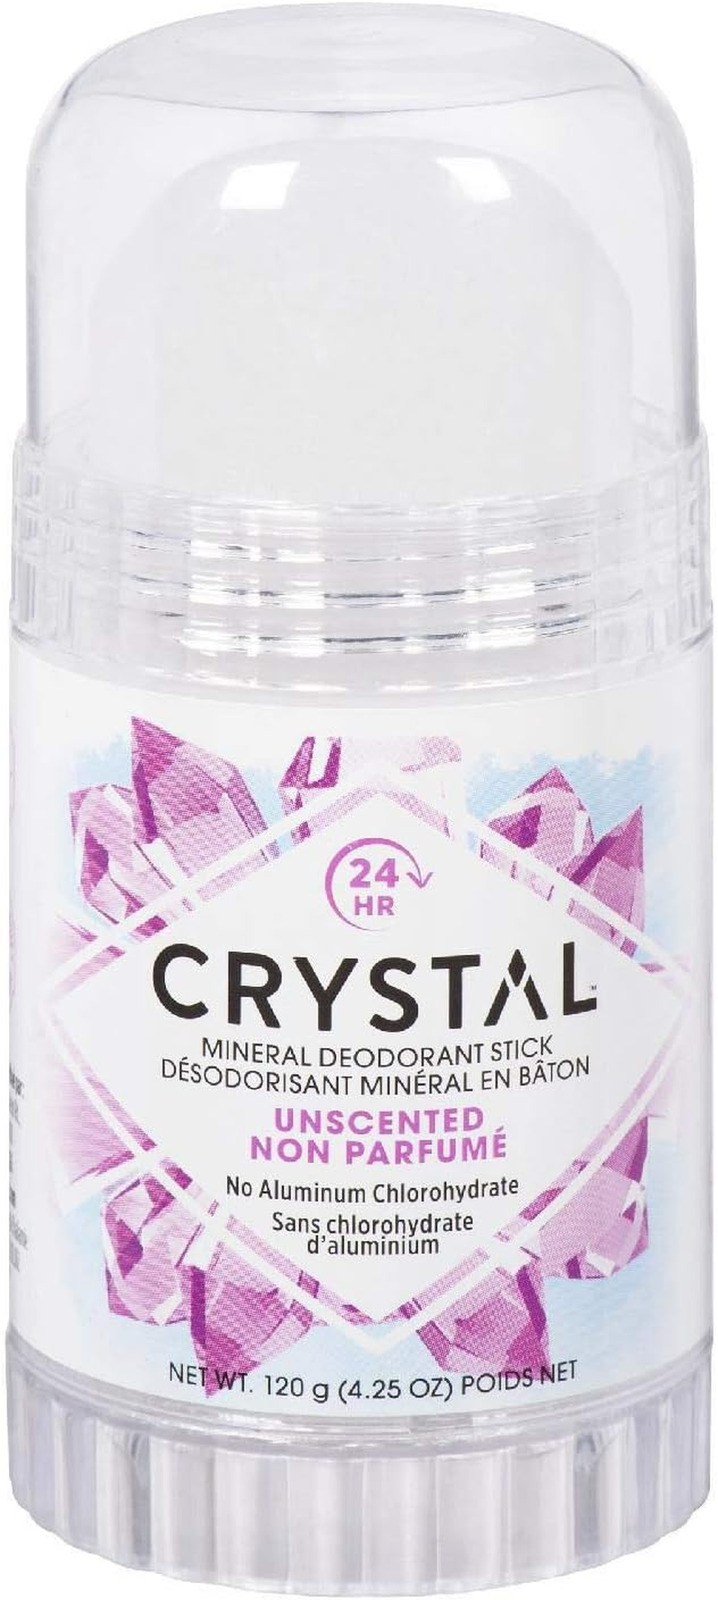 Crystal Deodorant Fragrance Free Stick, 120G